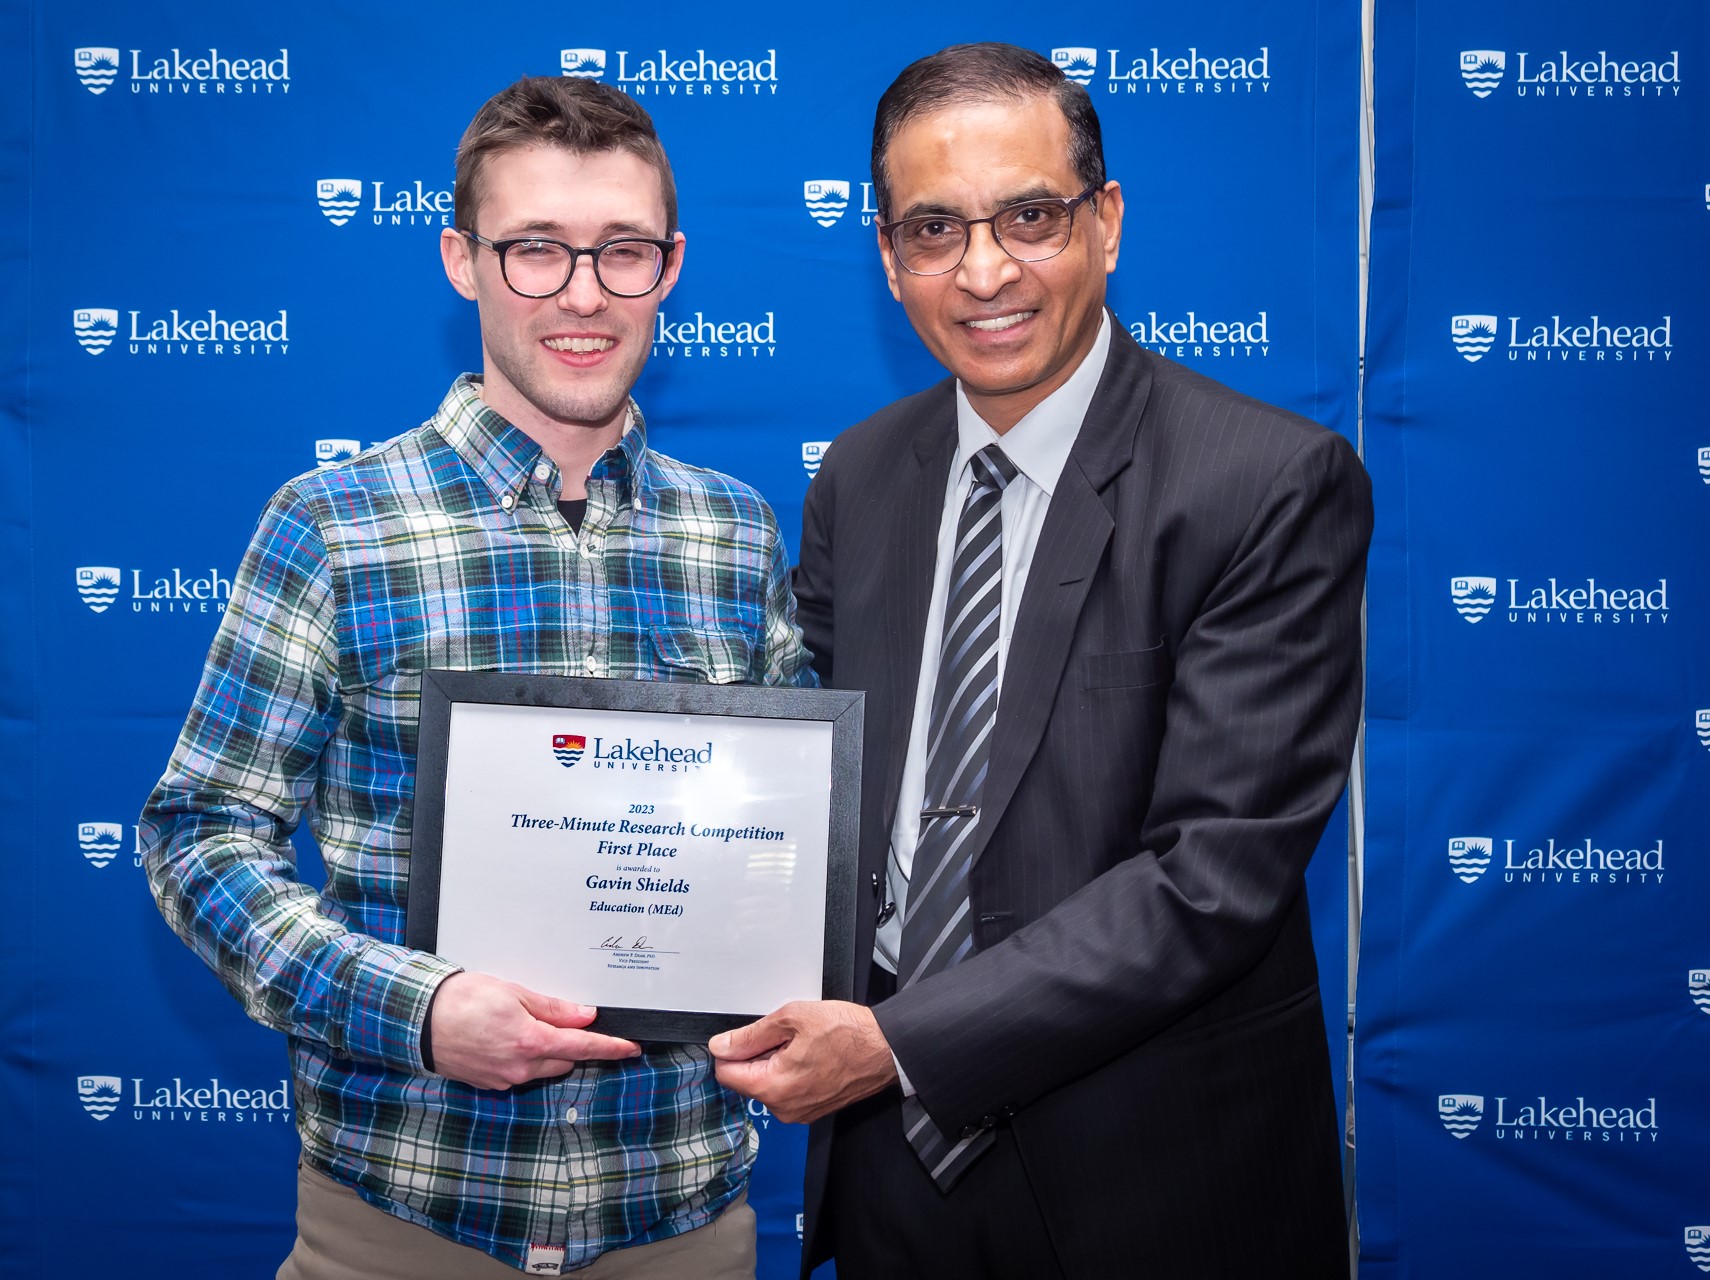 Photo of Three-Minute Research Award  Winner Gavin Shields, Education MEd., with Chander Shahi, Dean of Graduate Studies